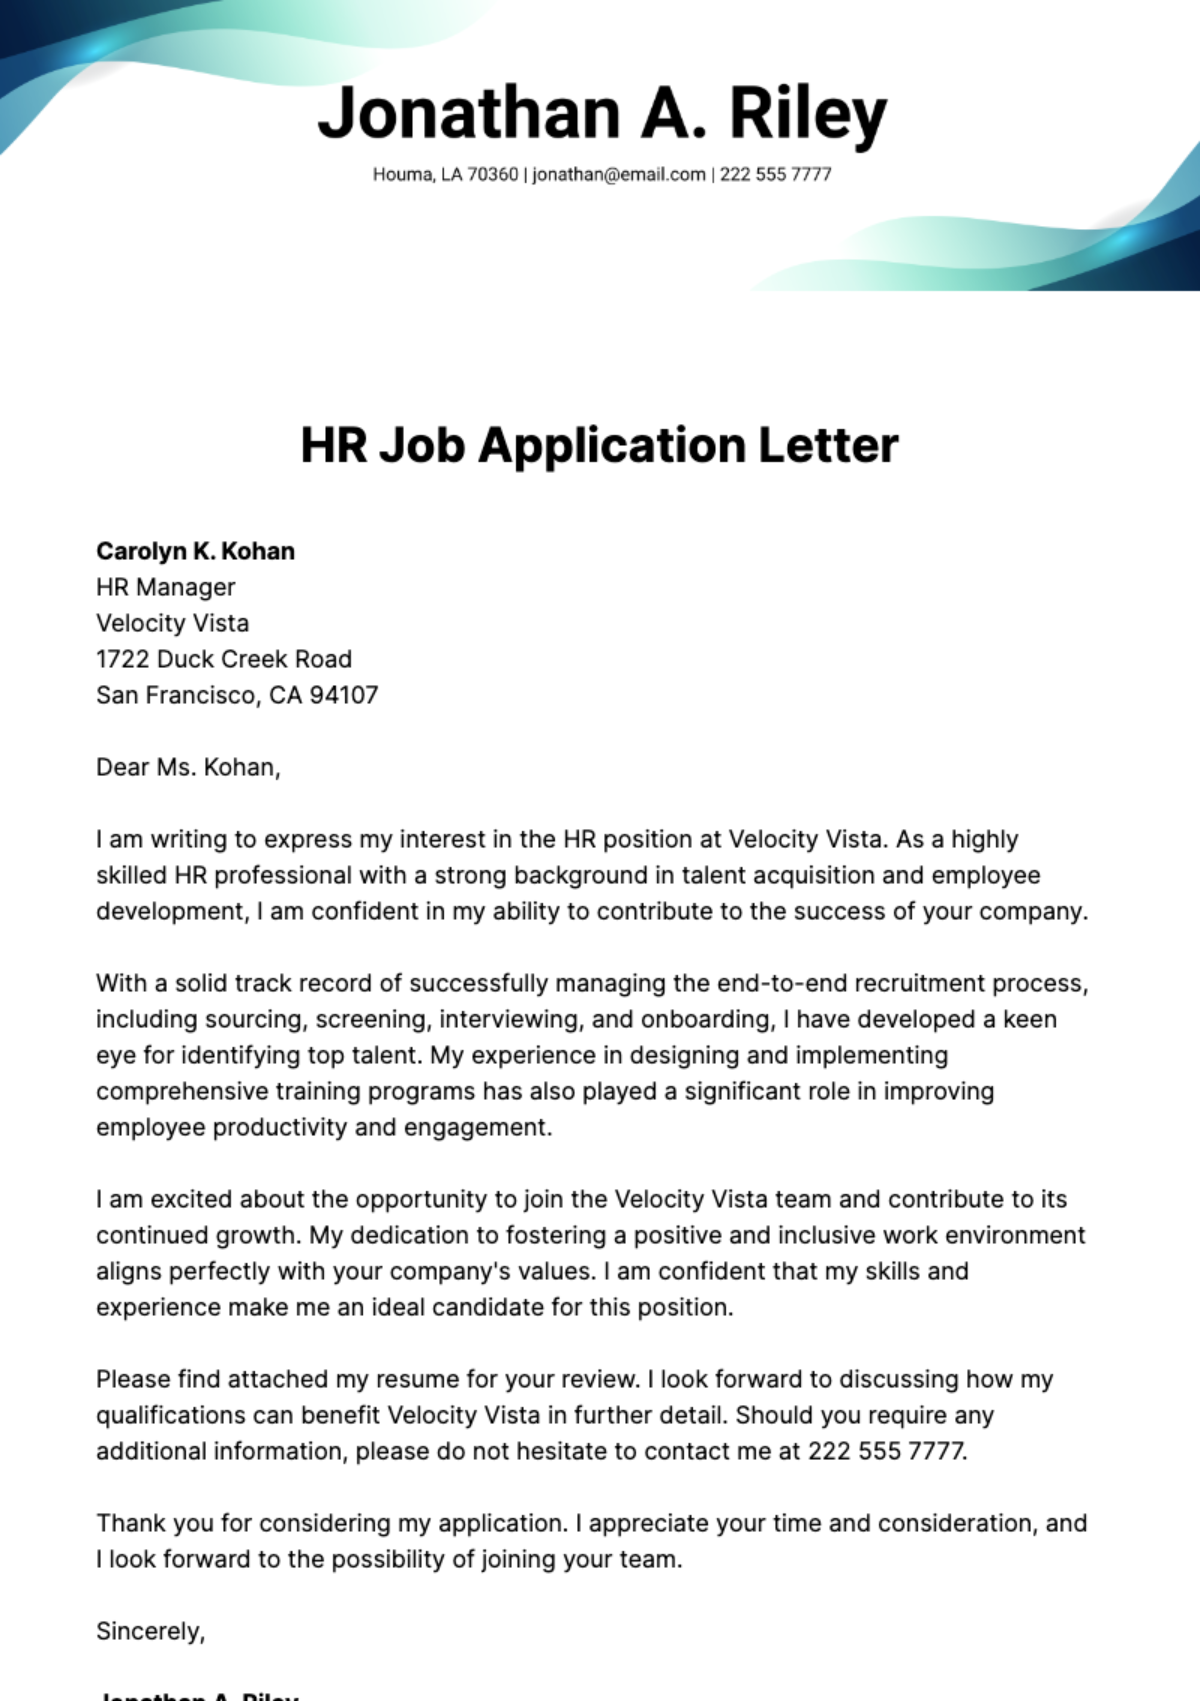 HR Job Application Letter Template